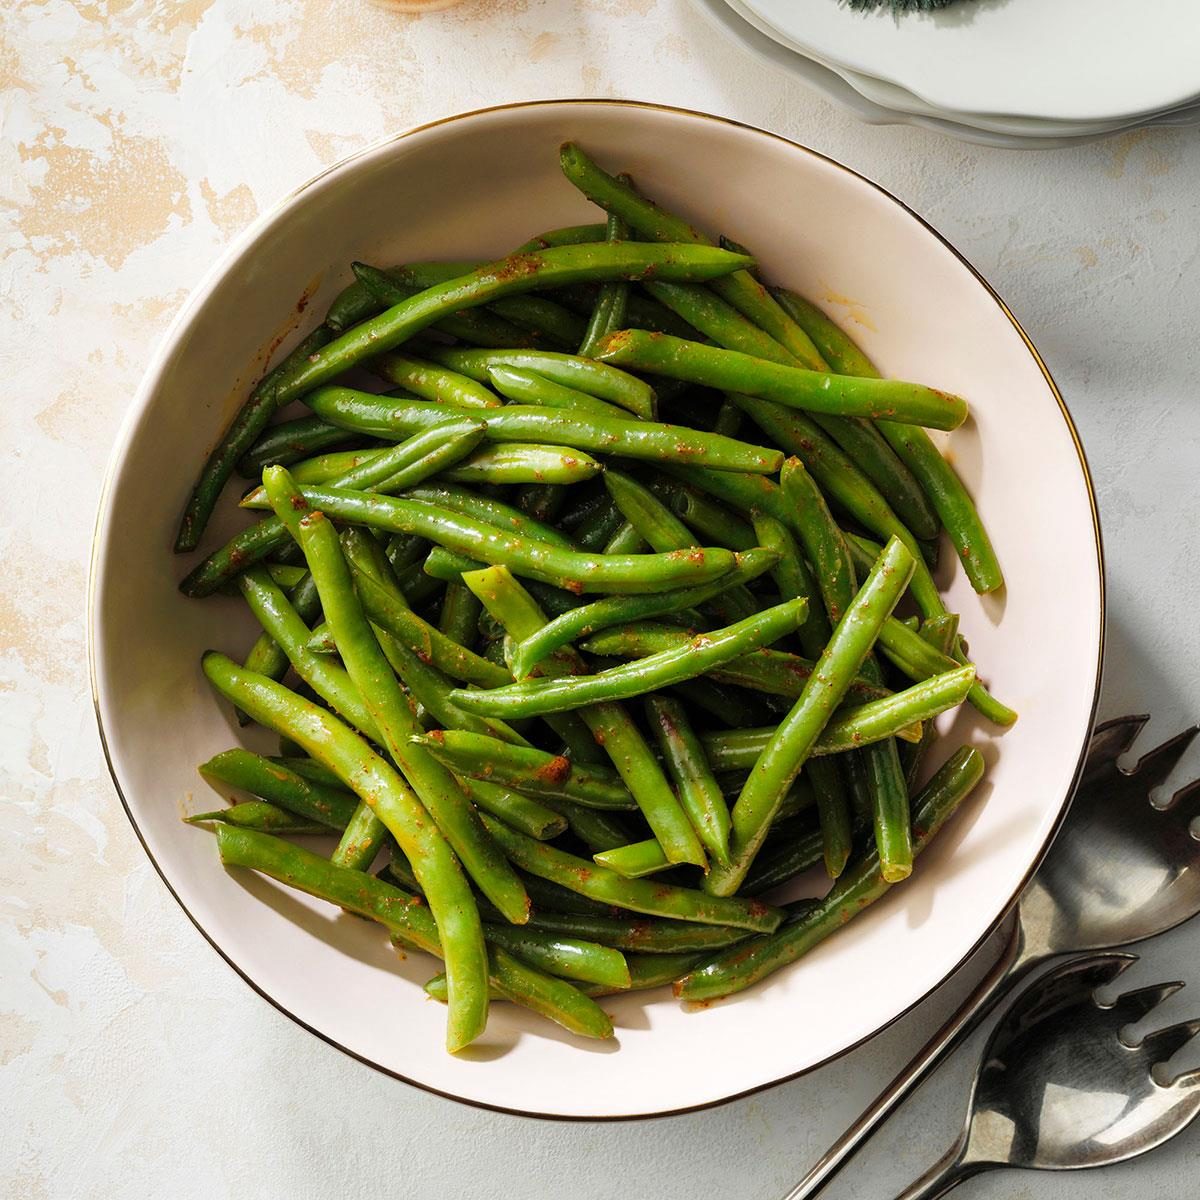 Seasoned Green Beans Recipe: How to Make It